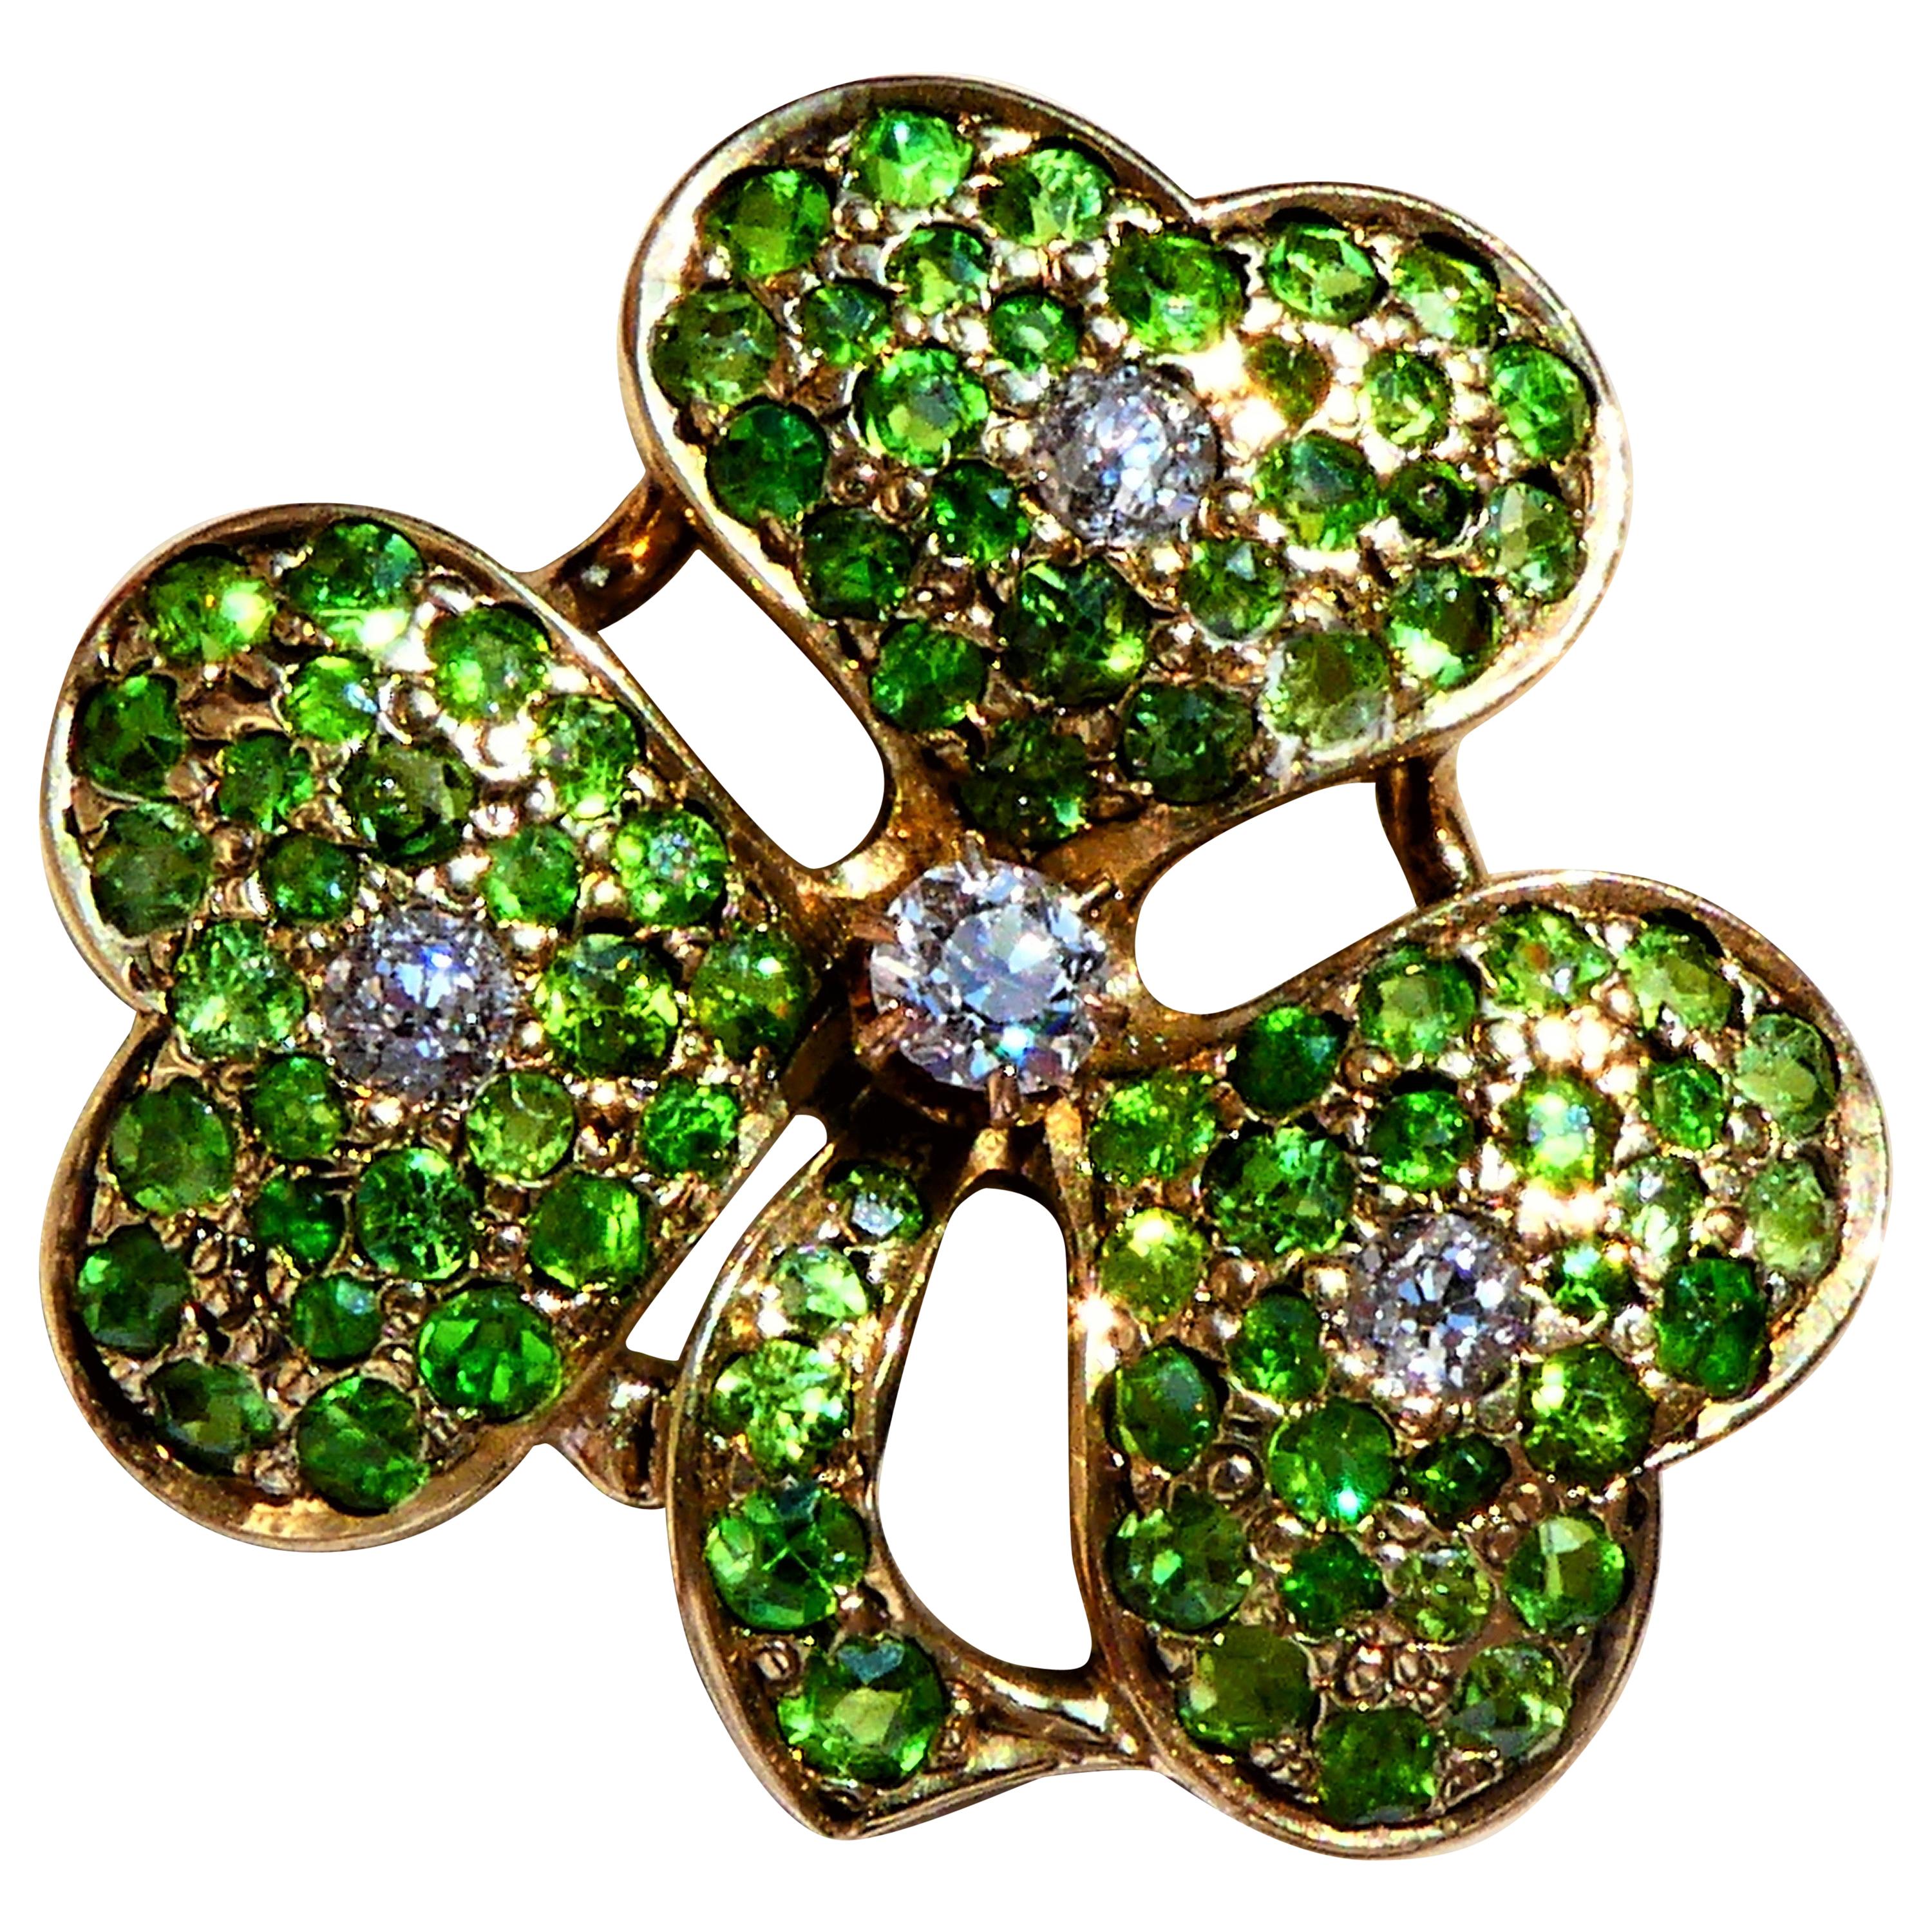 Antique Green Demantoid Garnets and Diamonds 14 Karat Gold Cloverleaf Brooch